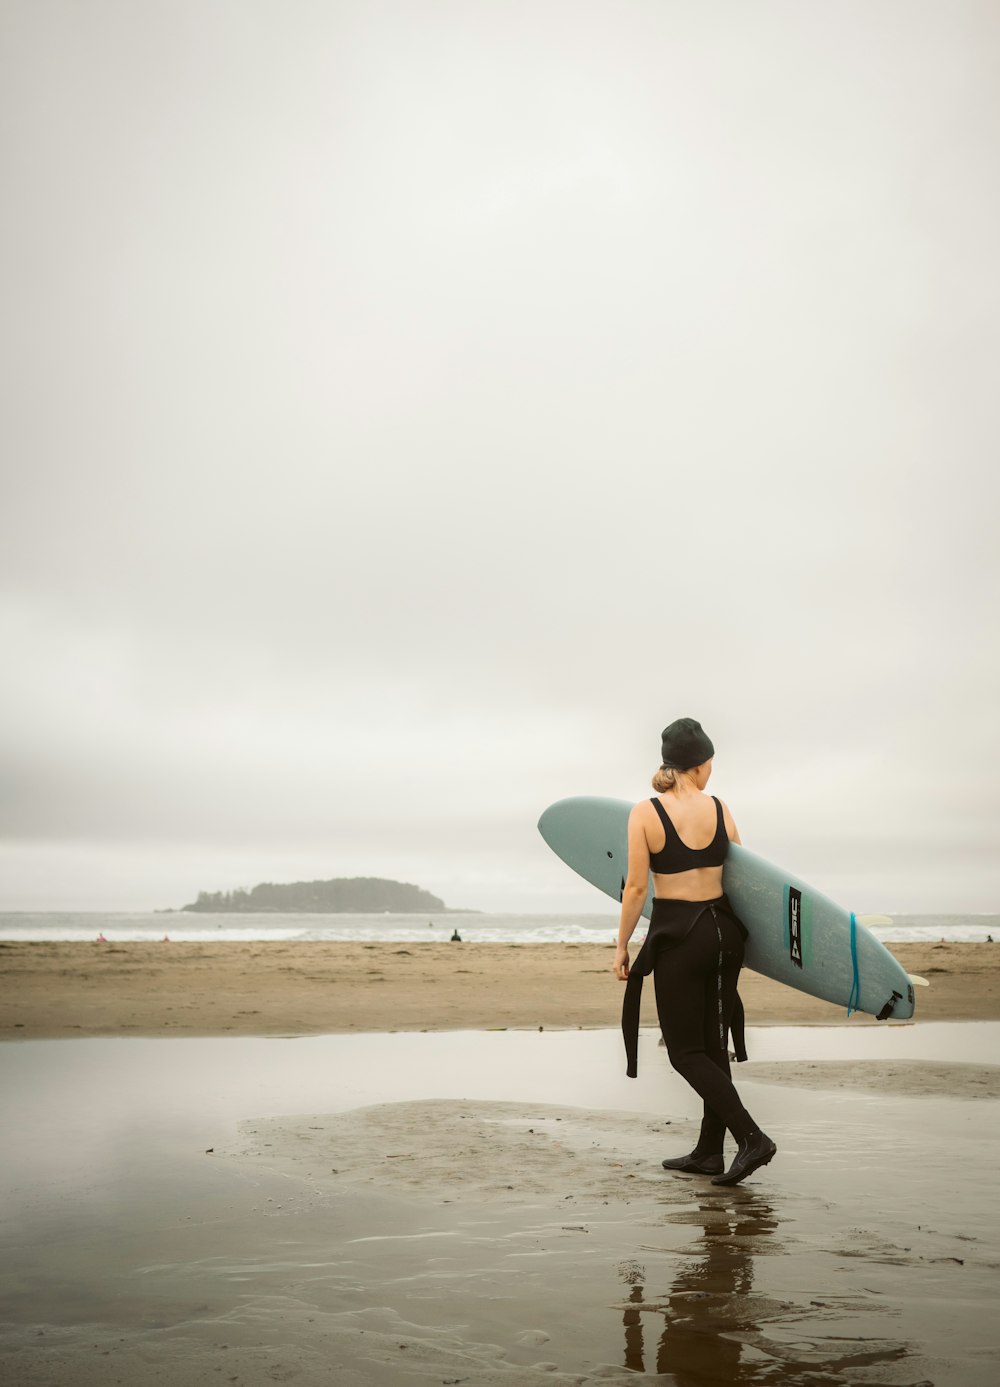 a woman carrying a surfboard on a wet beach